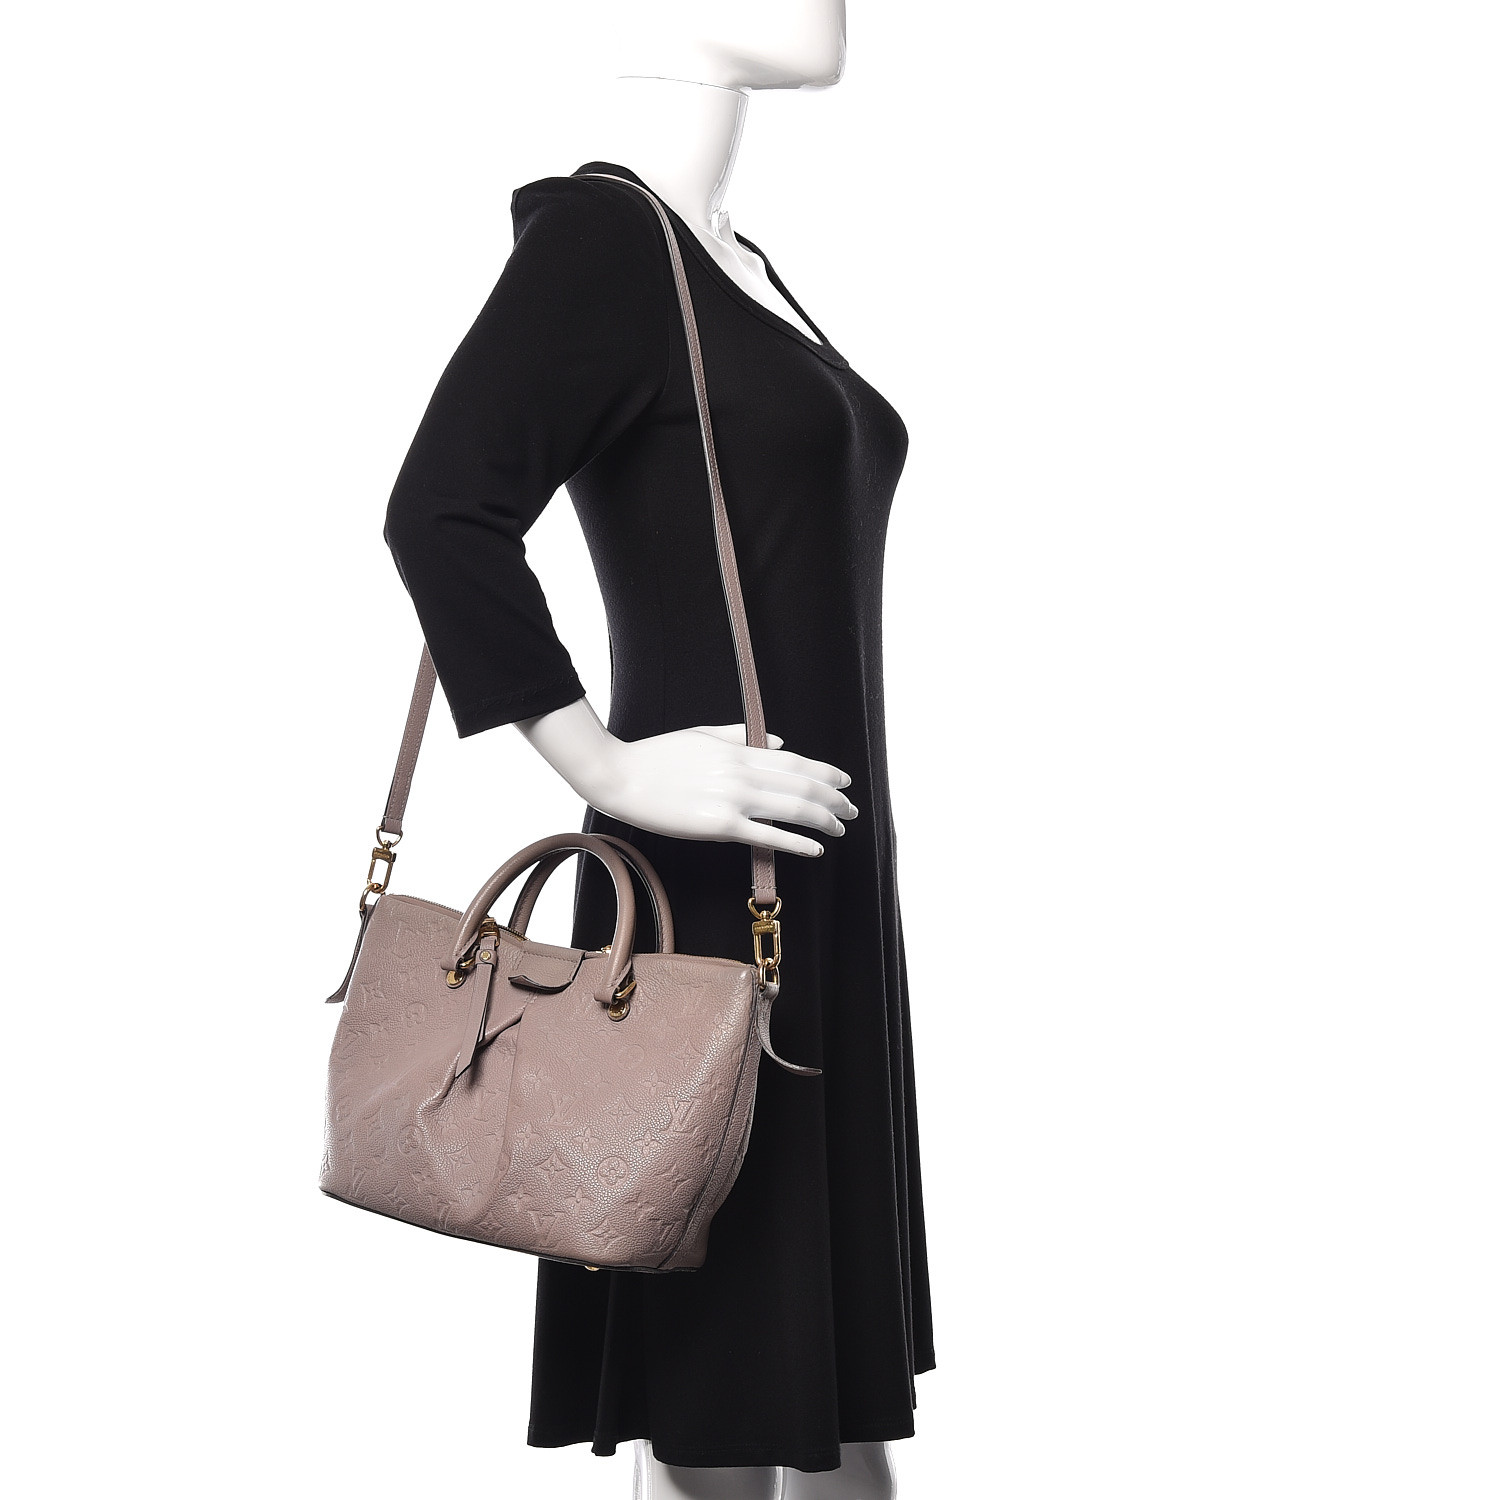 Unboxing the Louis Vuitton Empreinte Ponthieu PM Black - Fashionphile  purchase and review! 